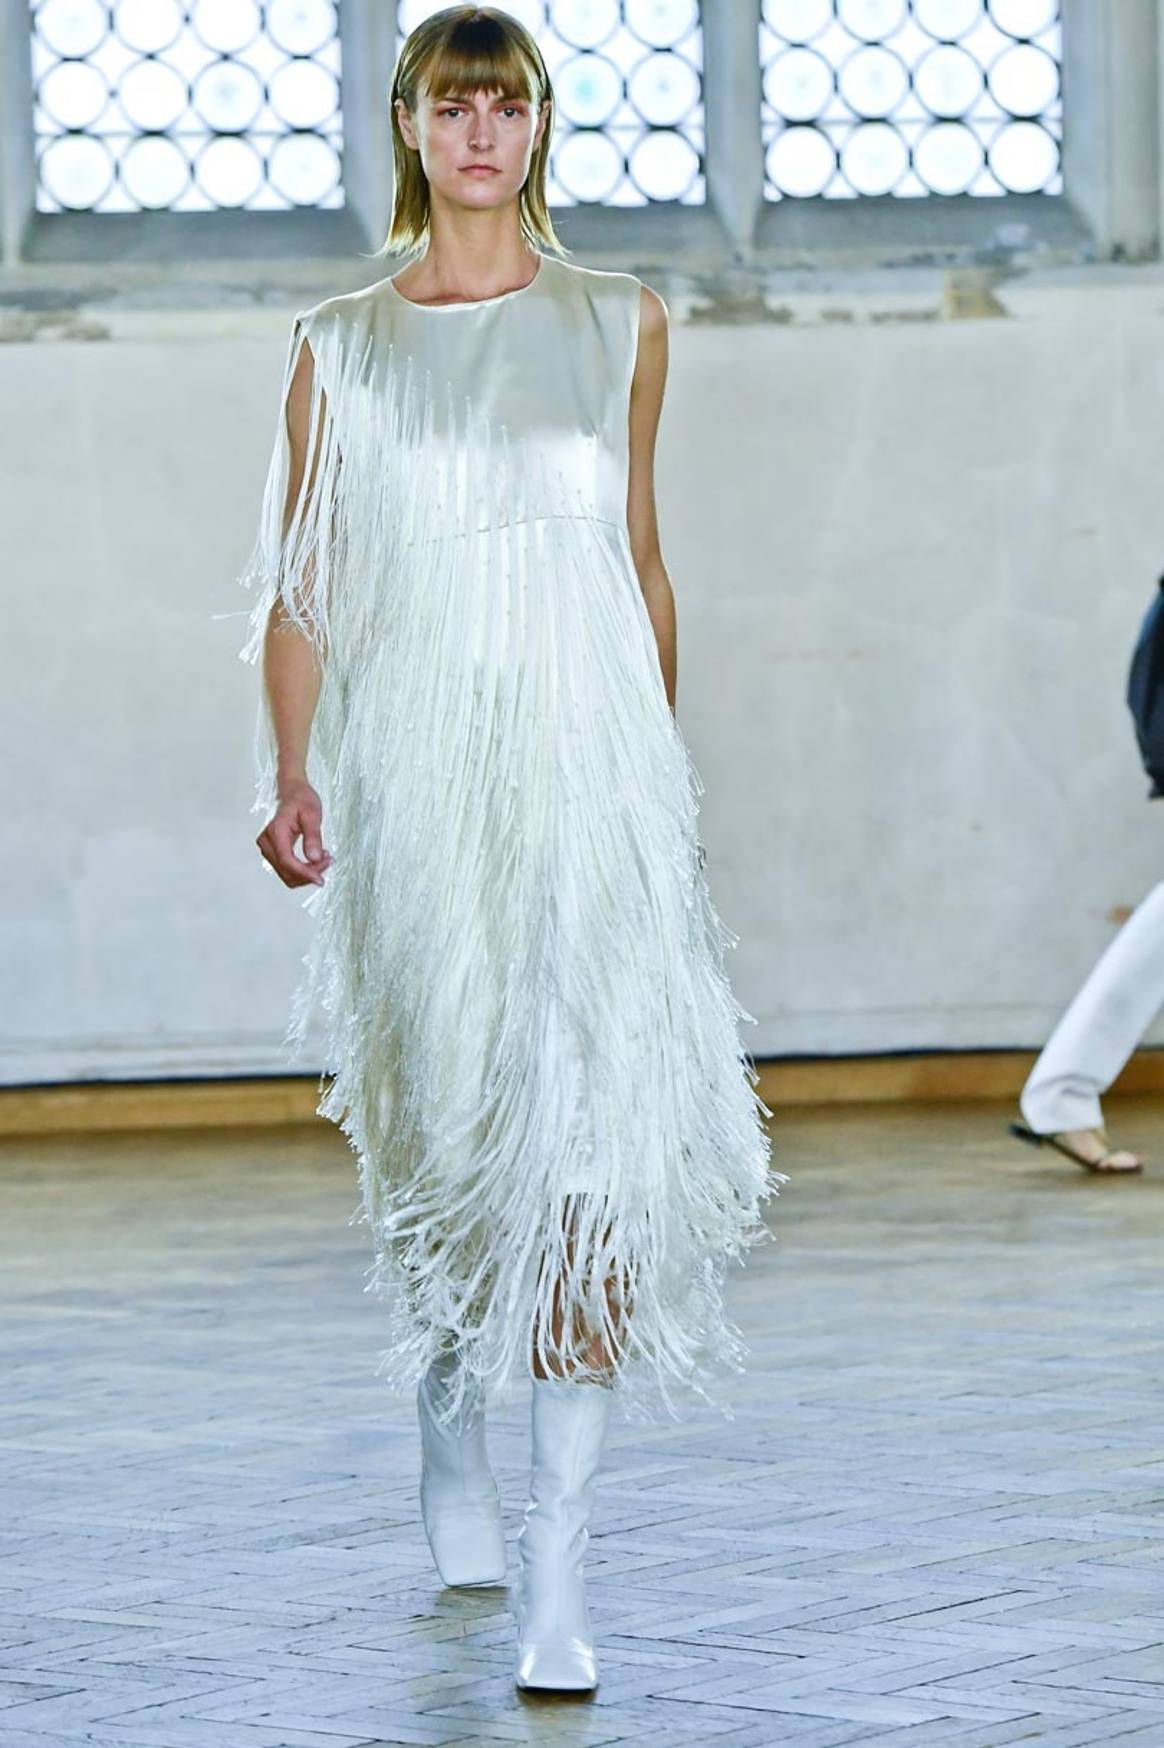 Dresses flow for Beckham, billow for Goddard: London fashion trends